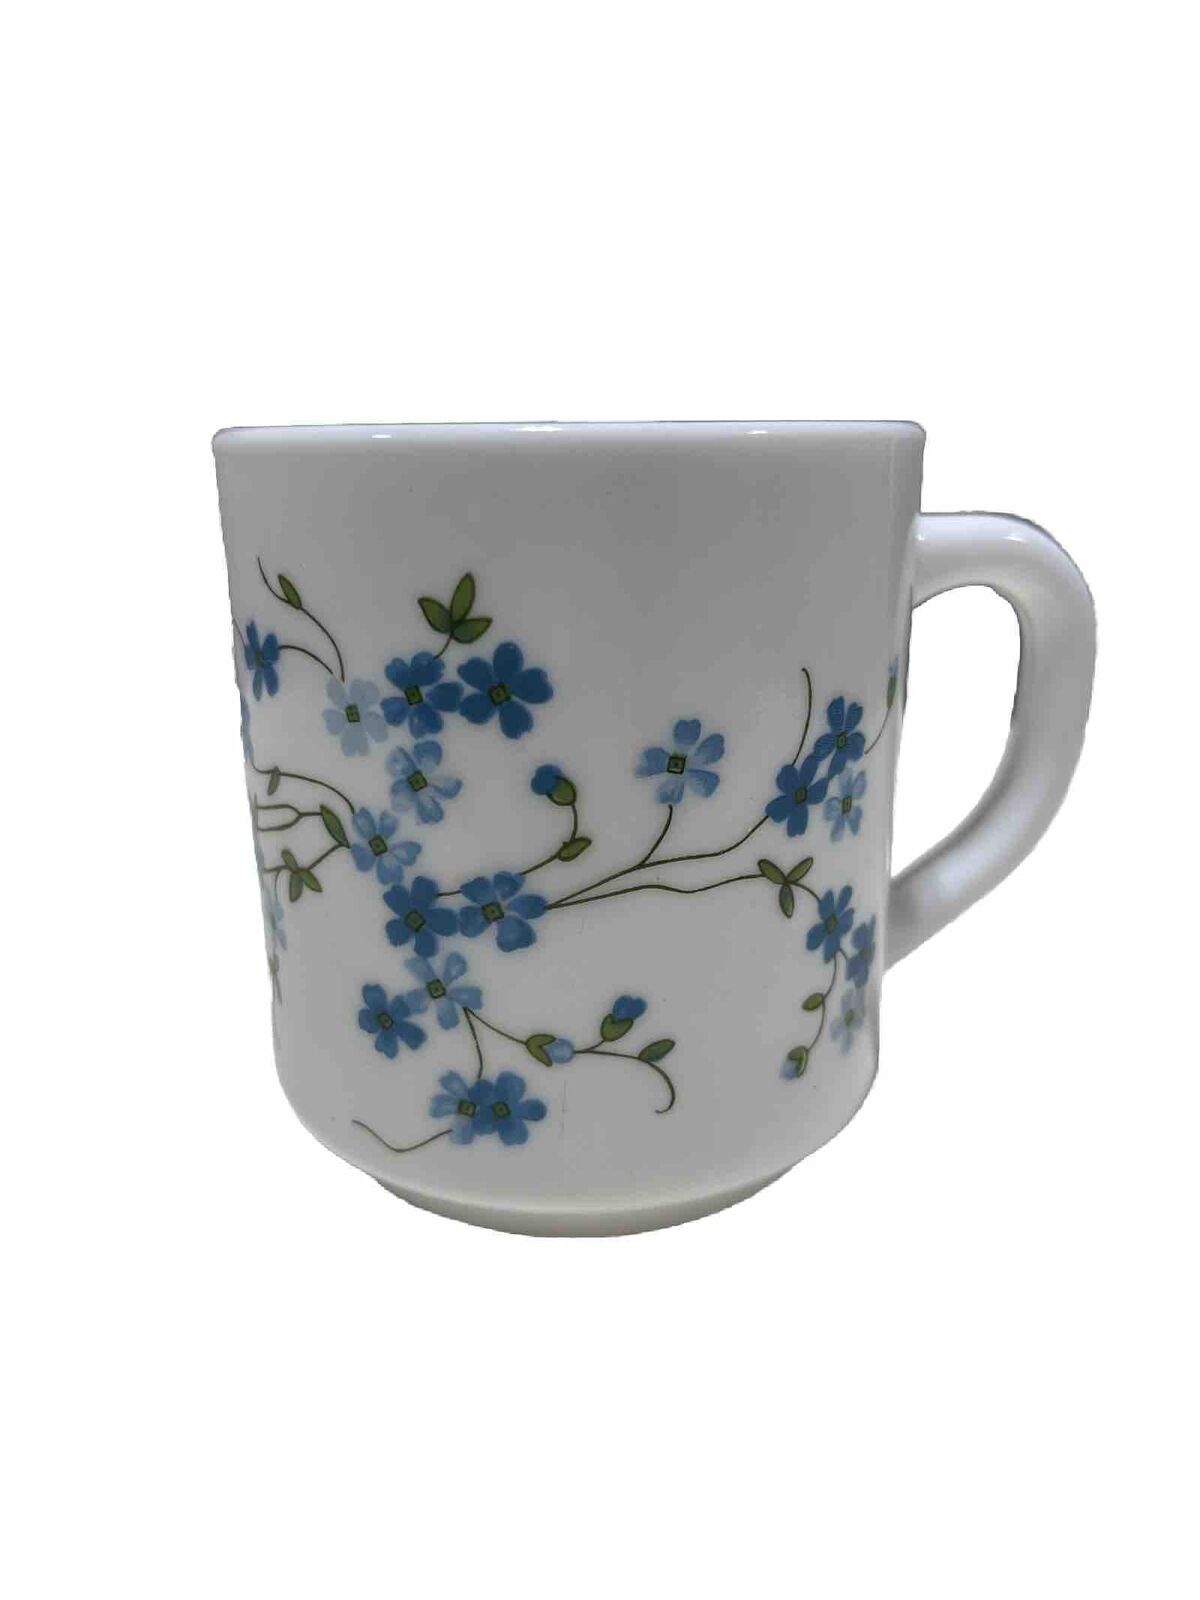 Arcopal France Milk Glass Coffee Tea Cup Mug With Little Blue Flowers